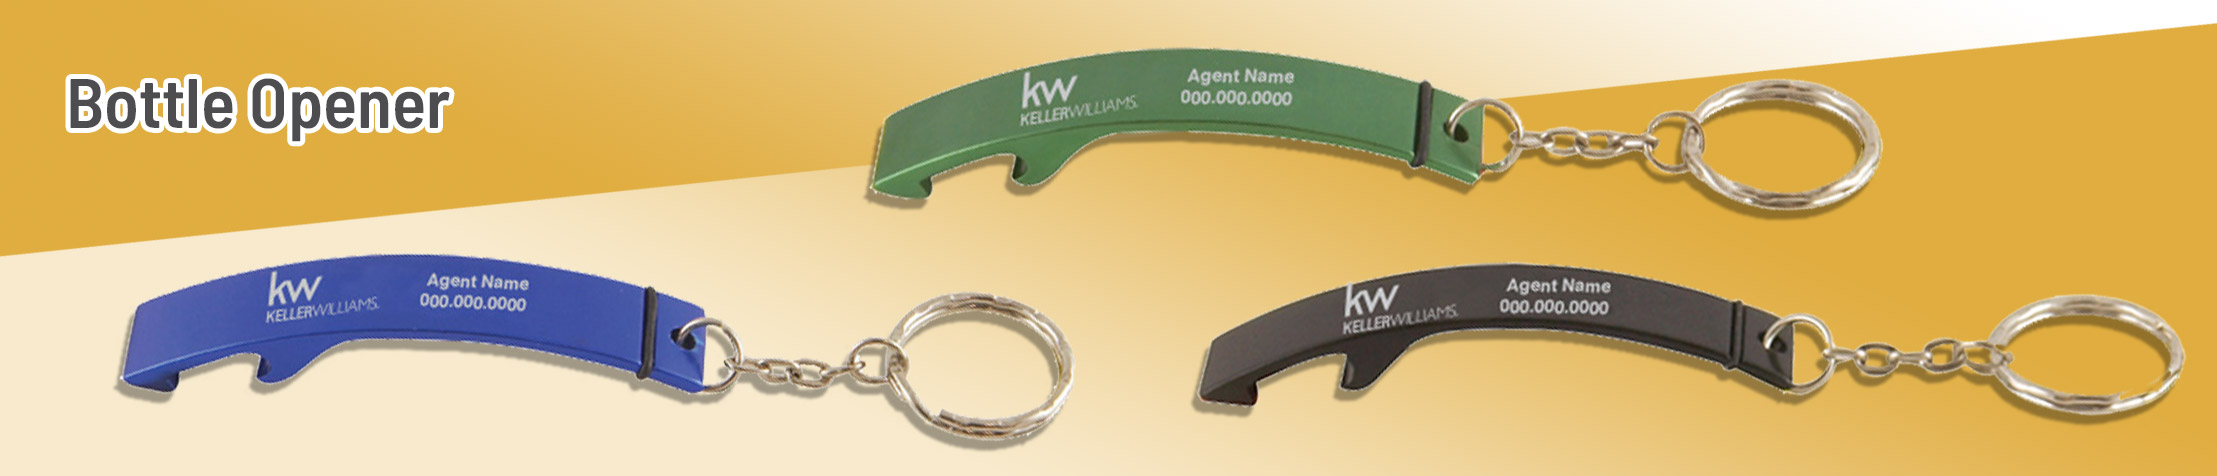 Keller Williams Real Estate Bottle Opener - KW personalized realtor promotional products | Sparkprint.com